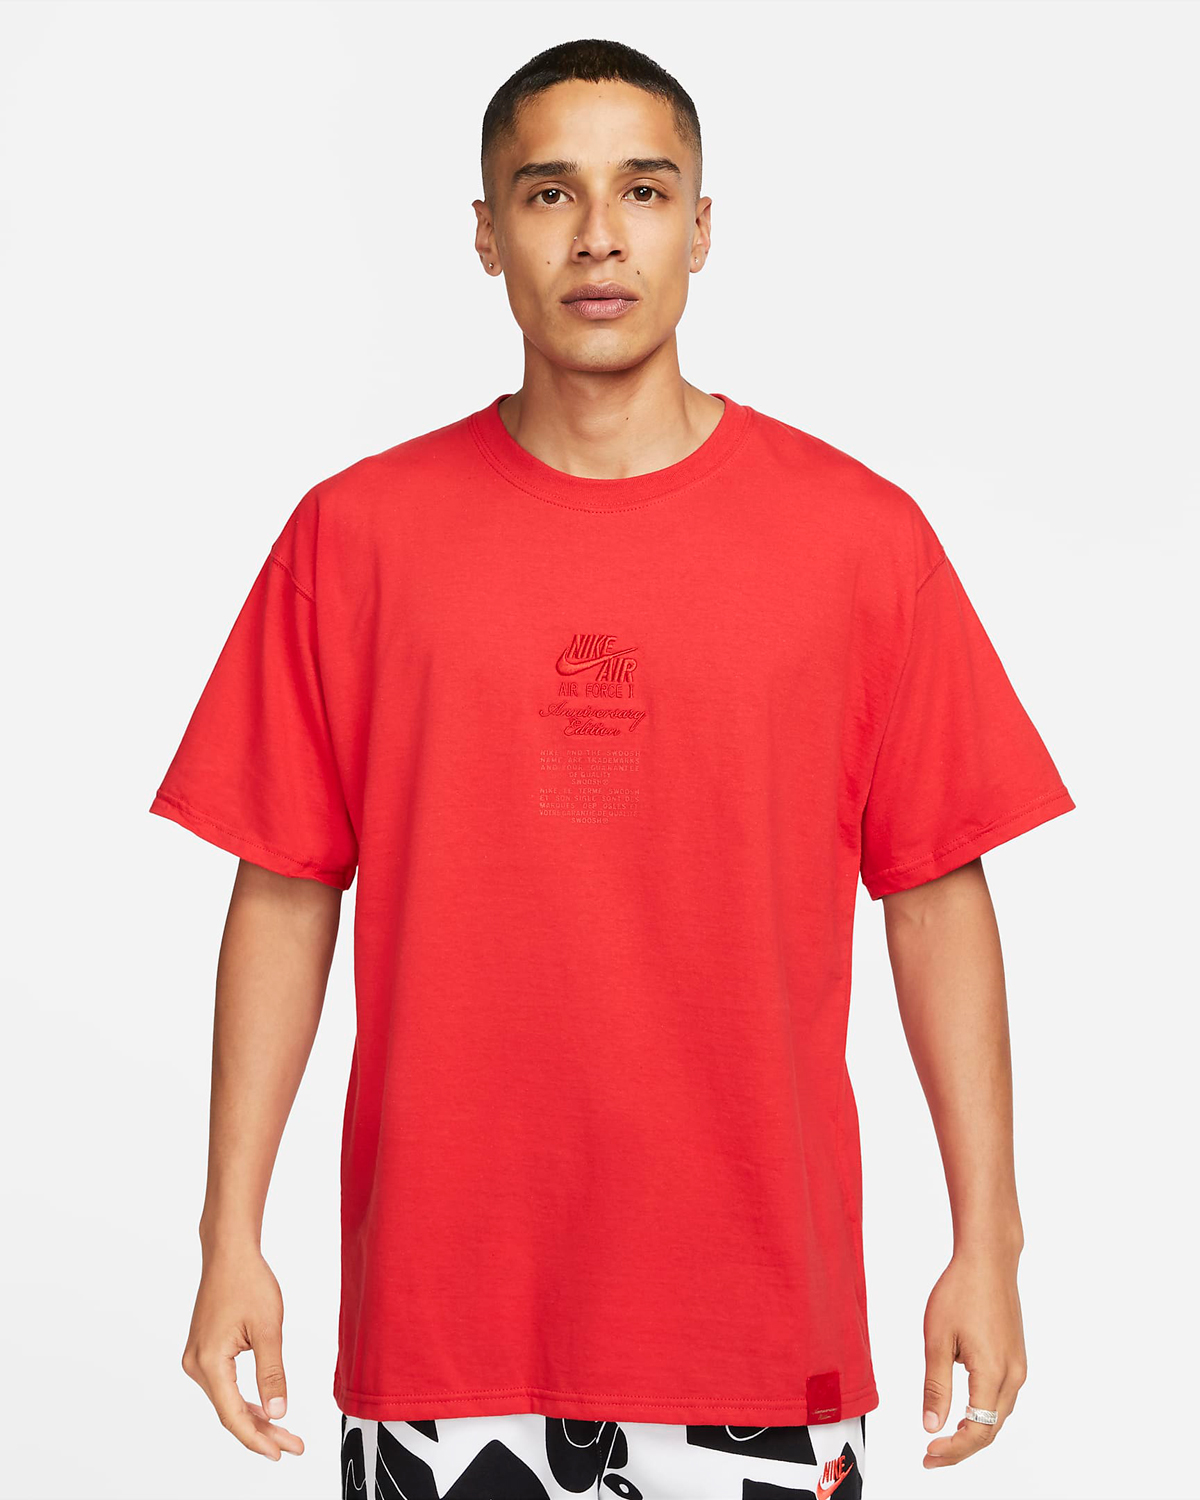 Nike-Air-Force-1-University-Red-Shirt-1